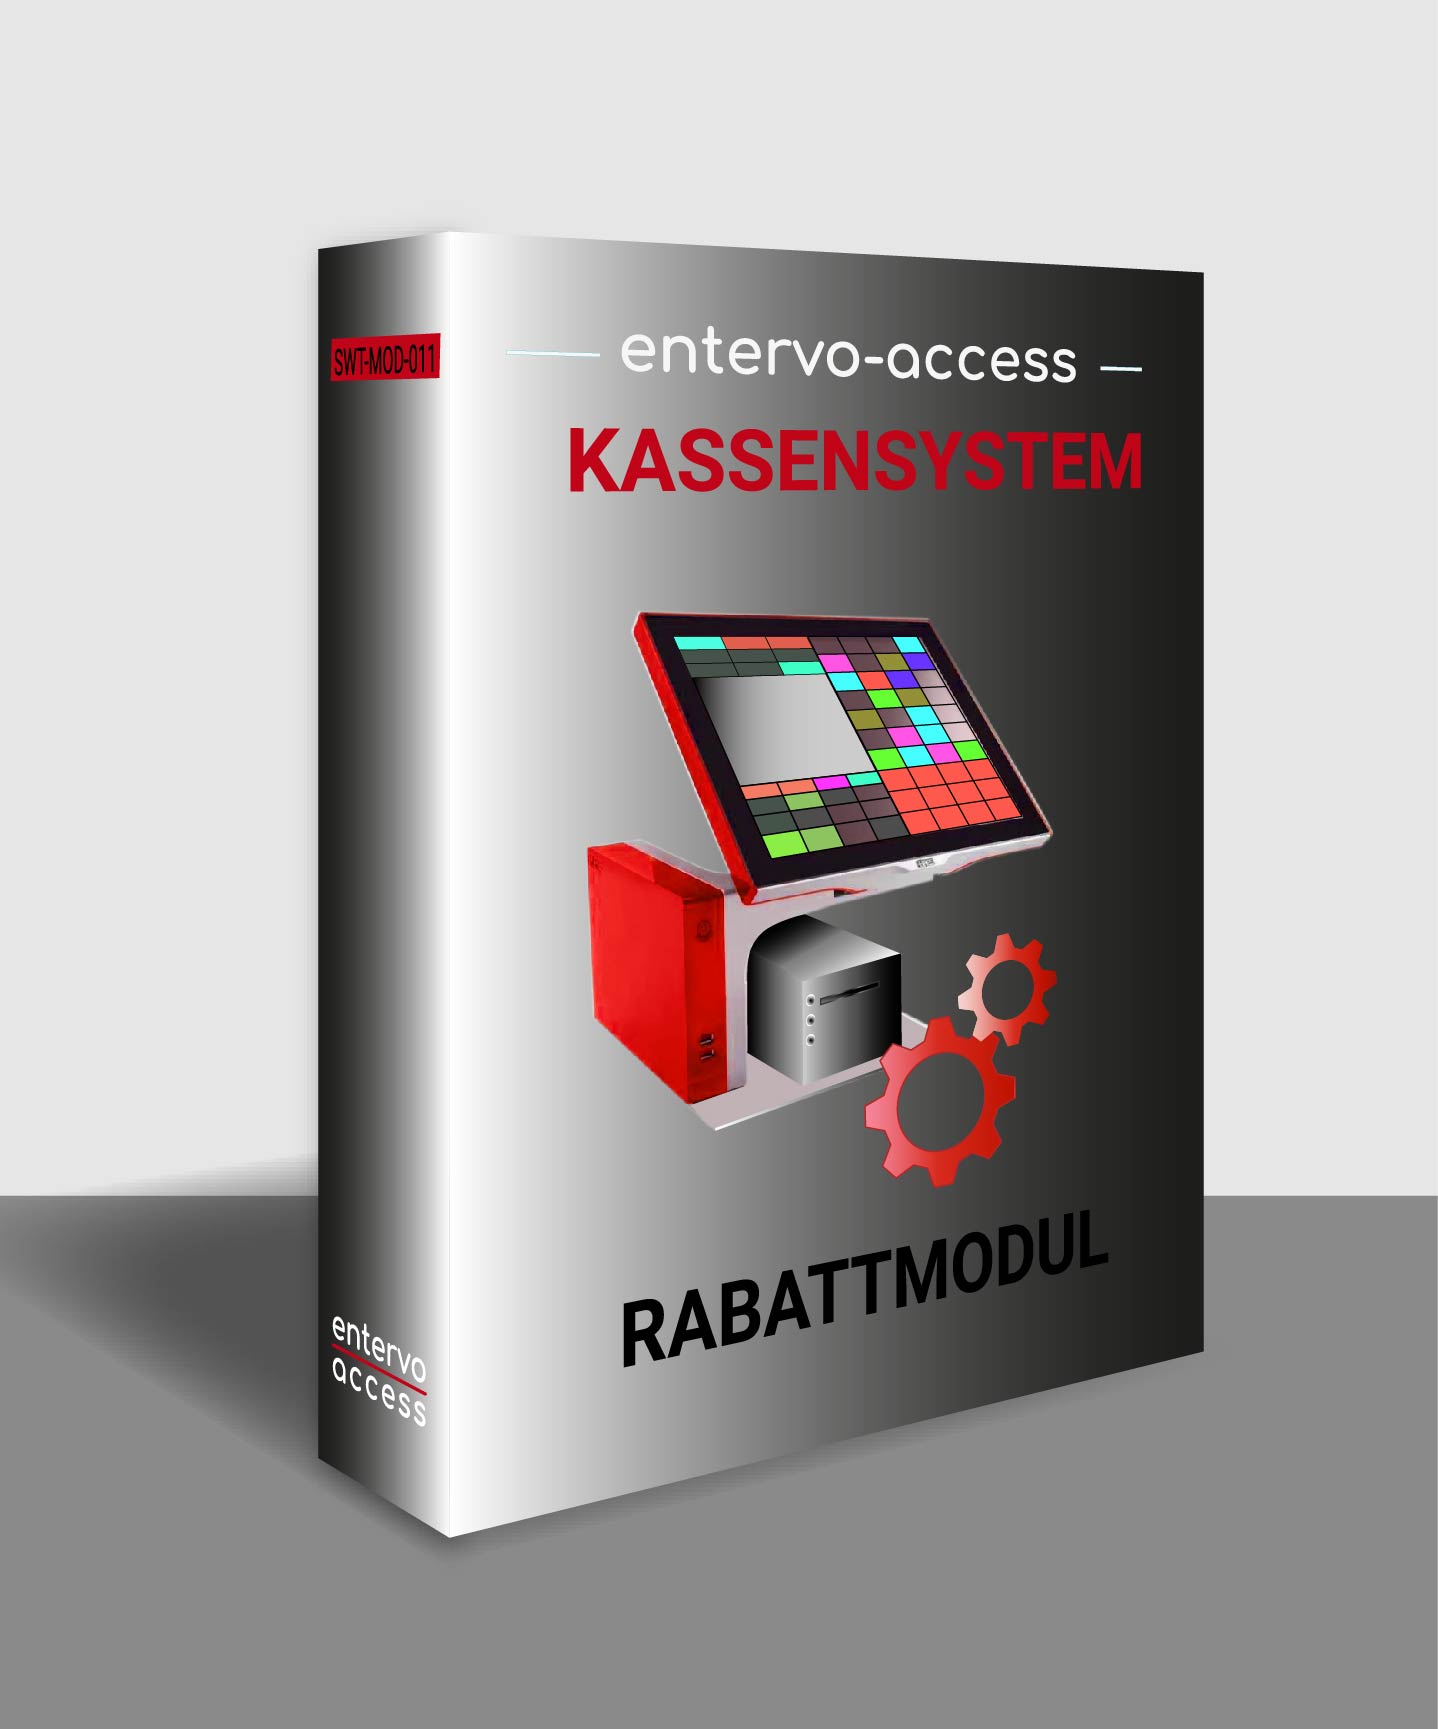 entervo-access kassensystem rabattmodul